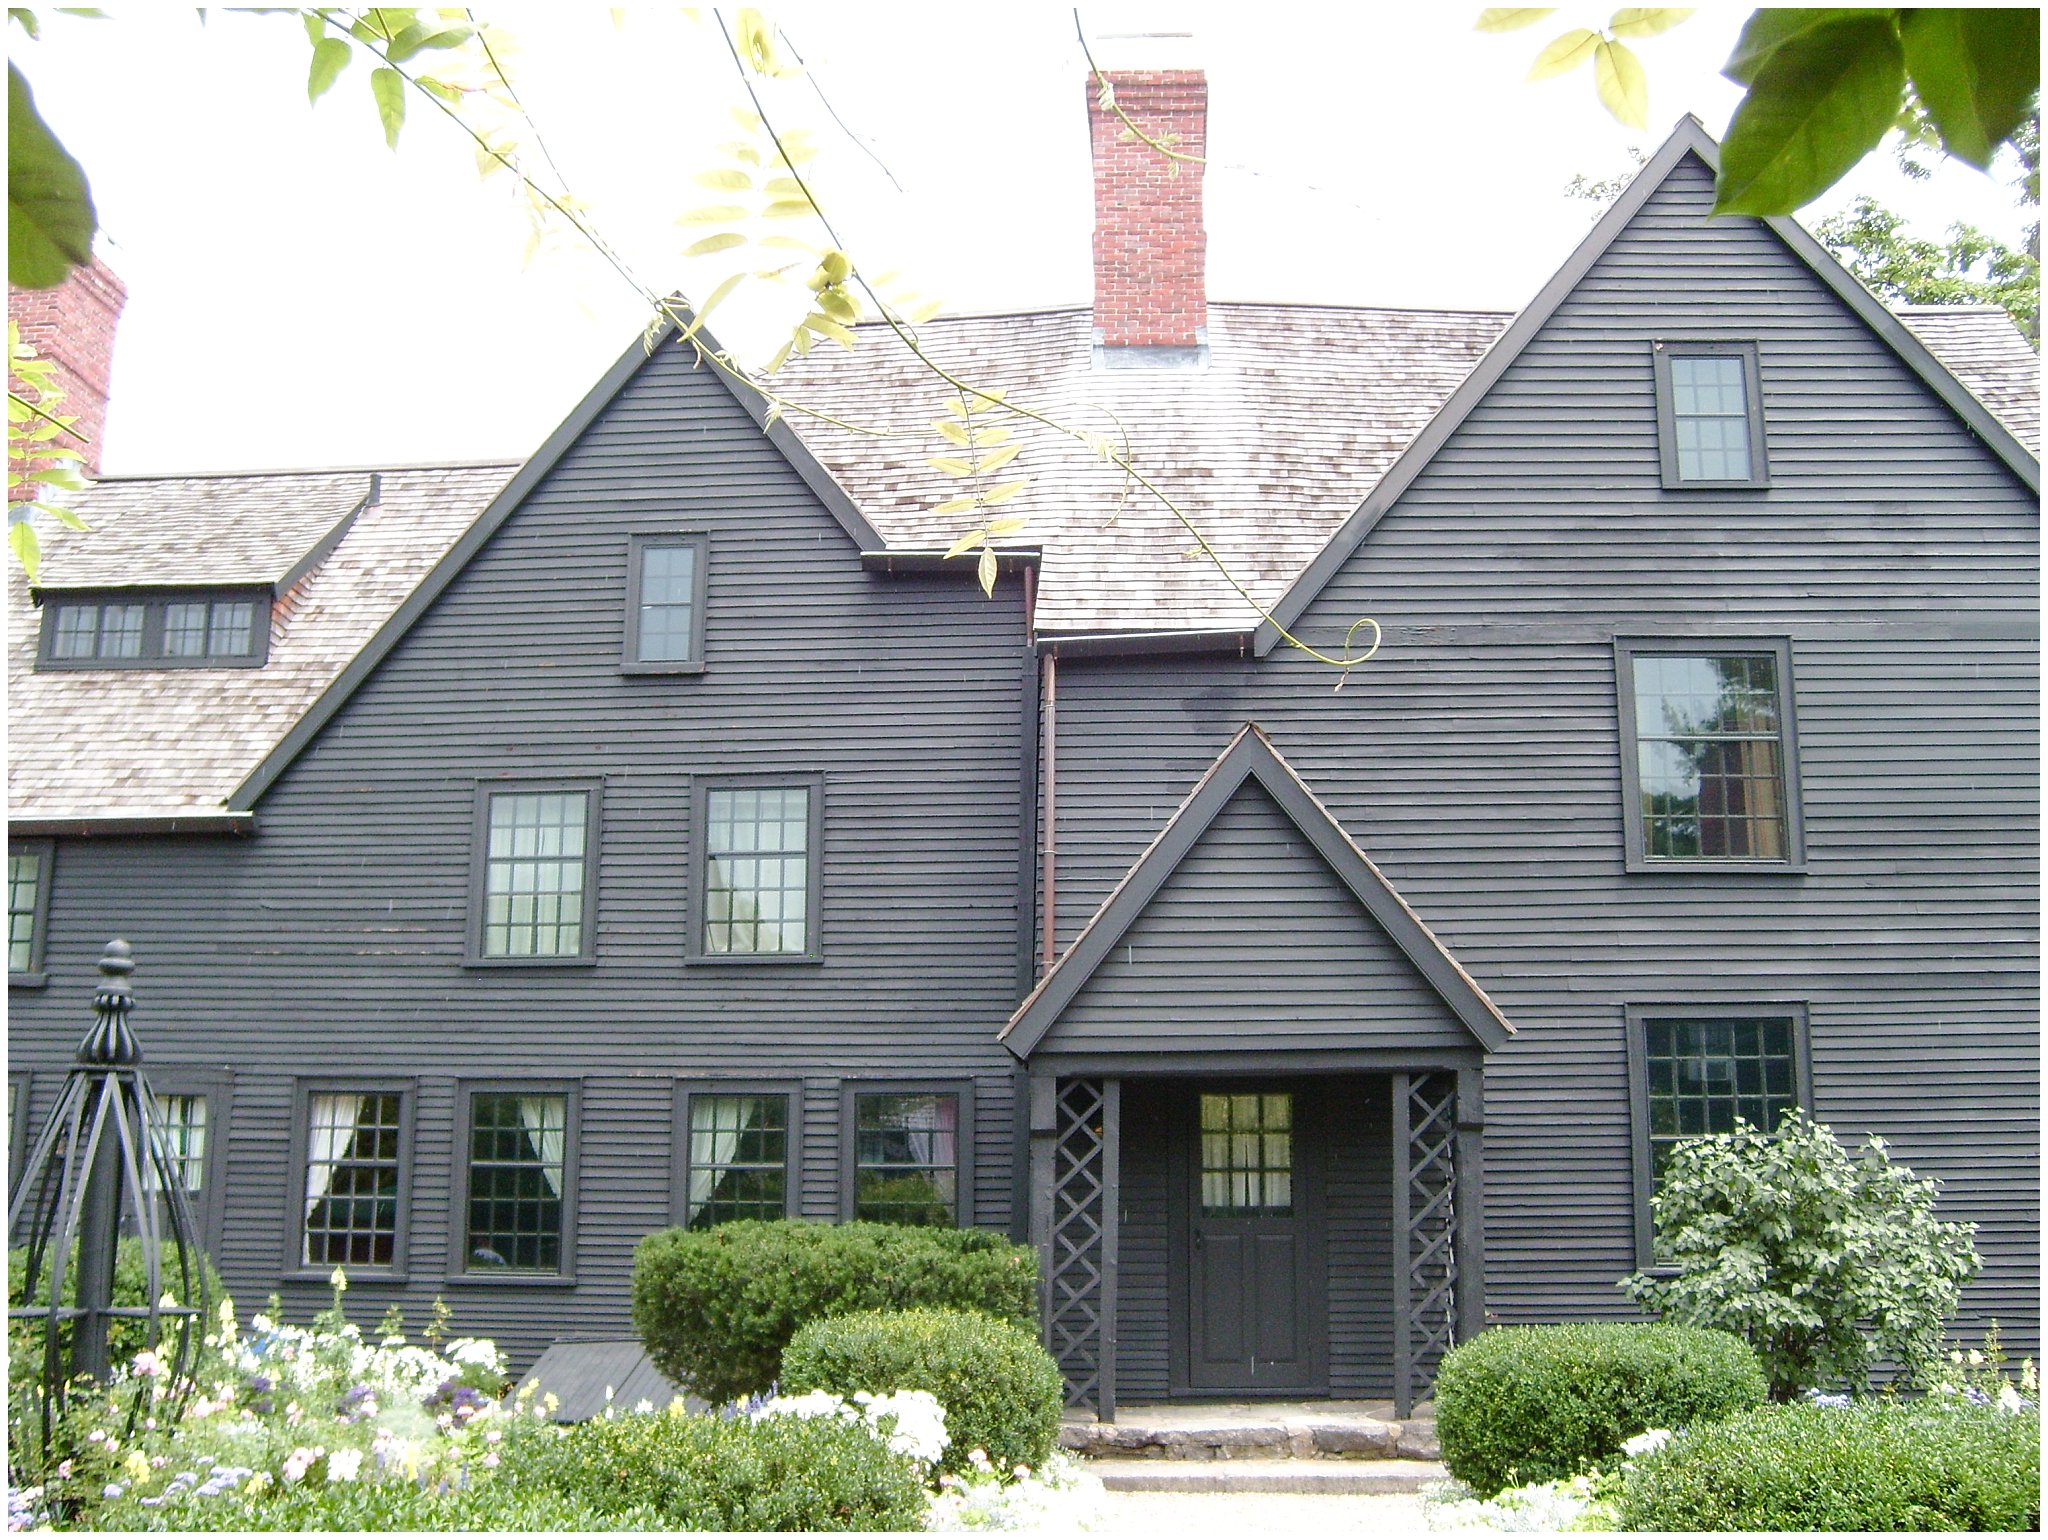 Witch House | Historic Massachusetts Honeymoon